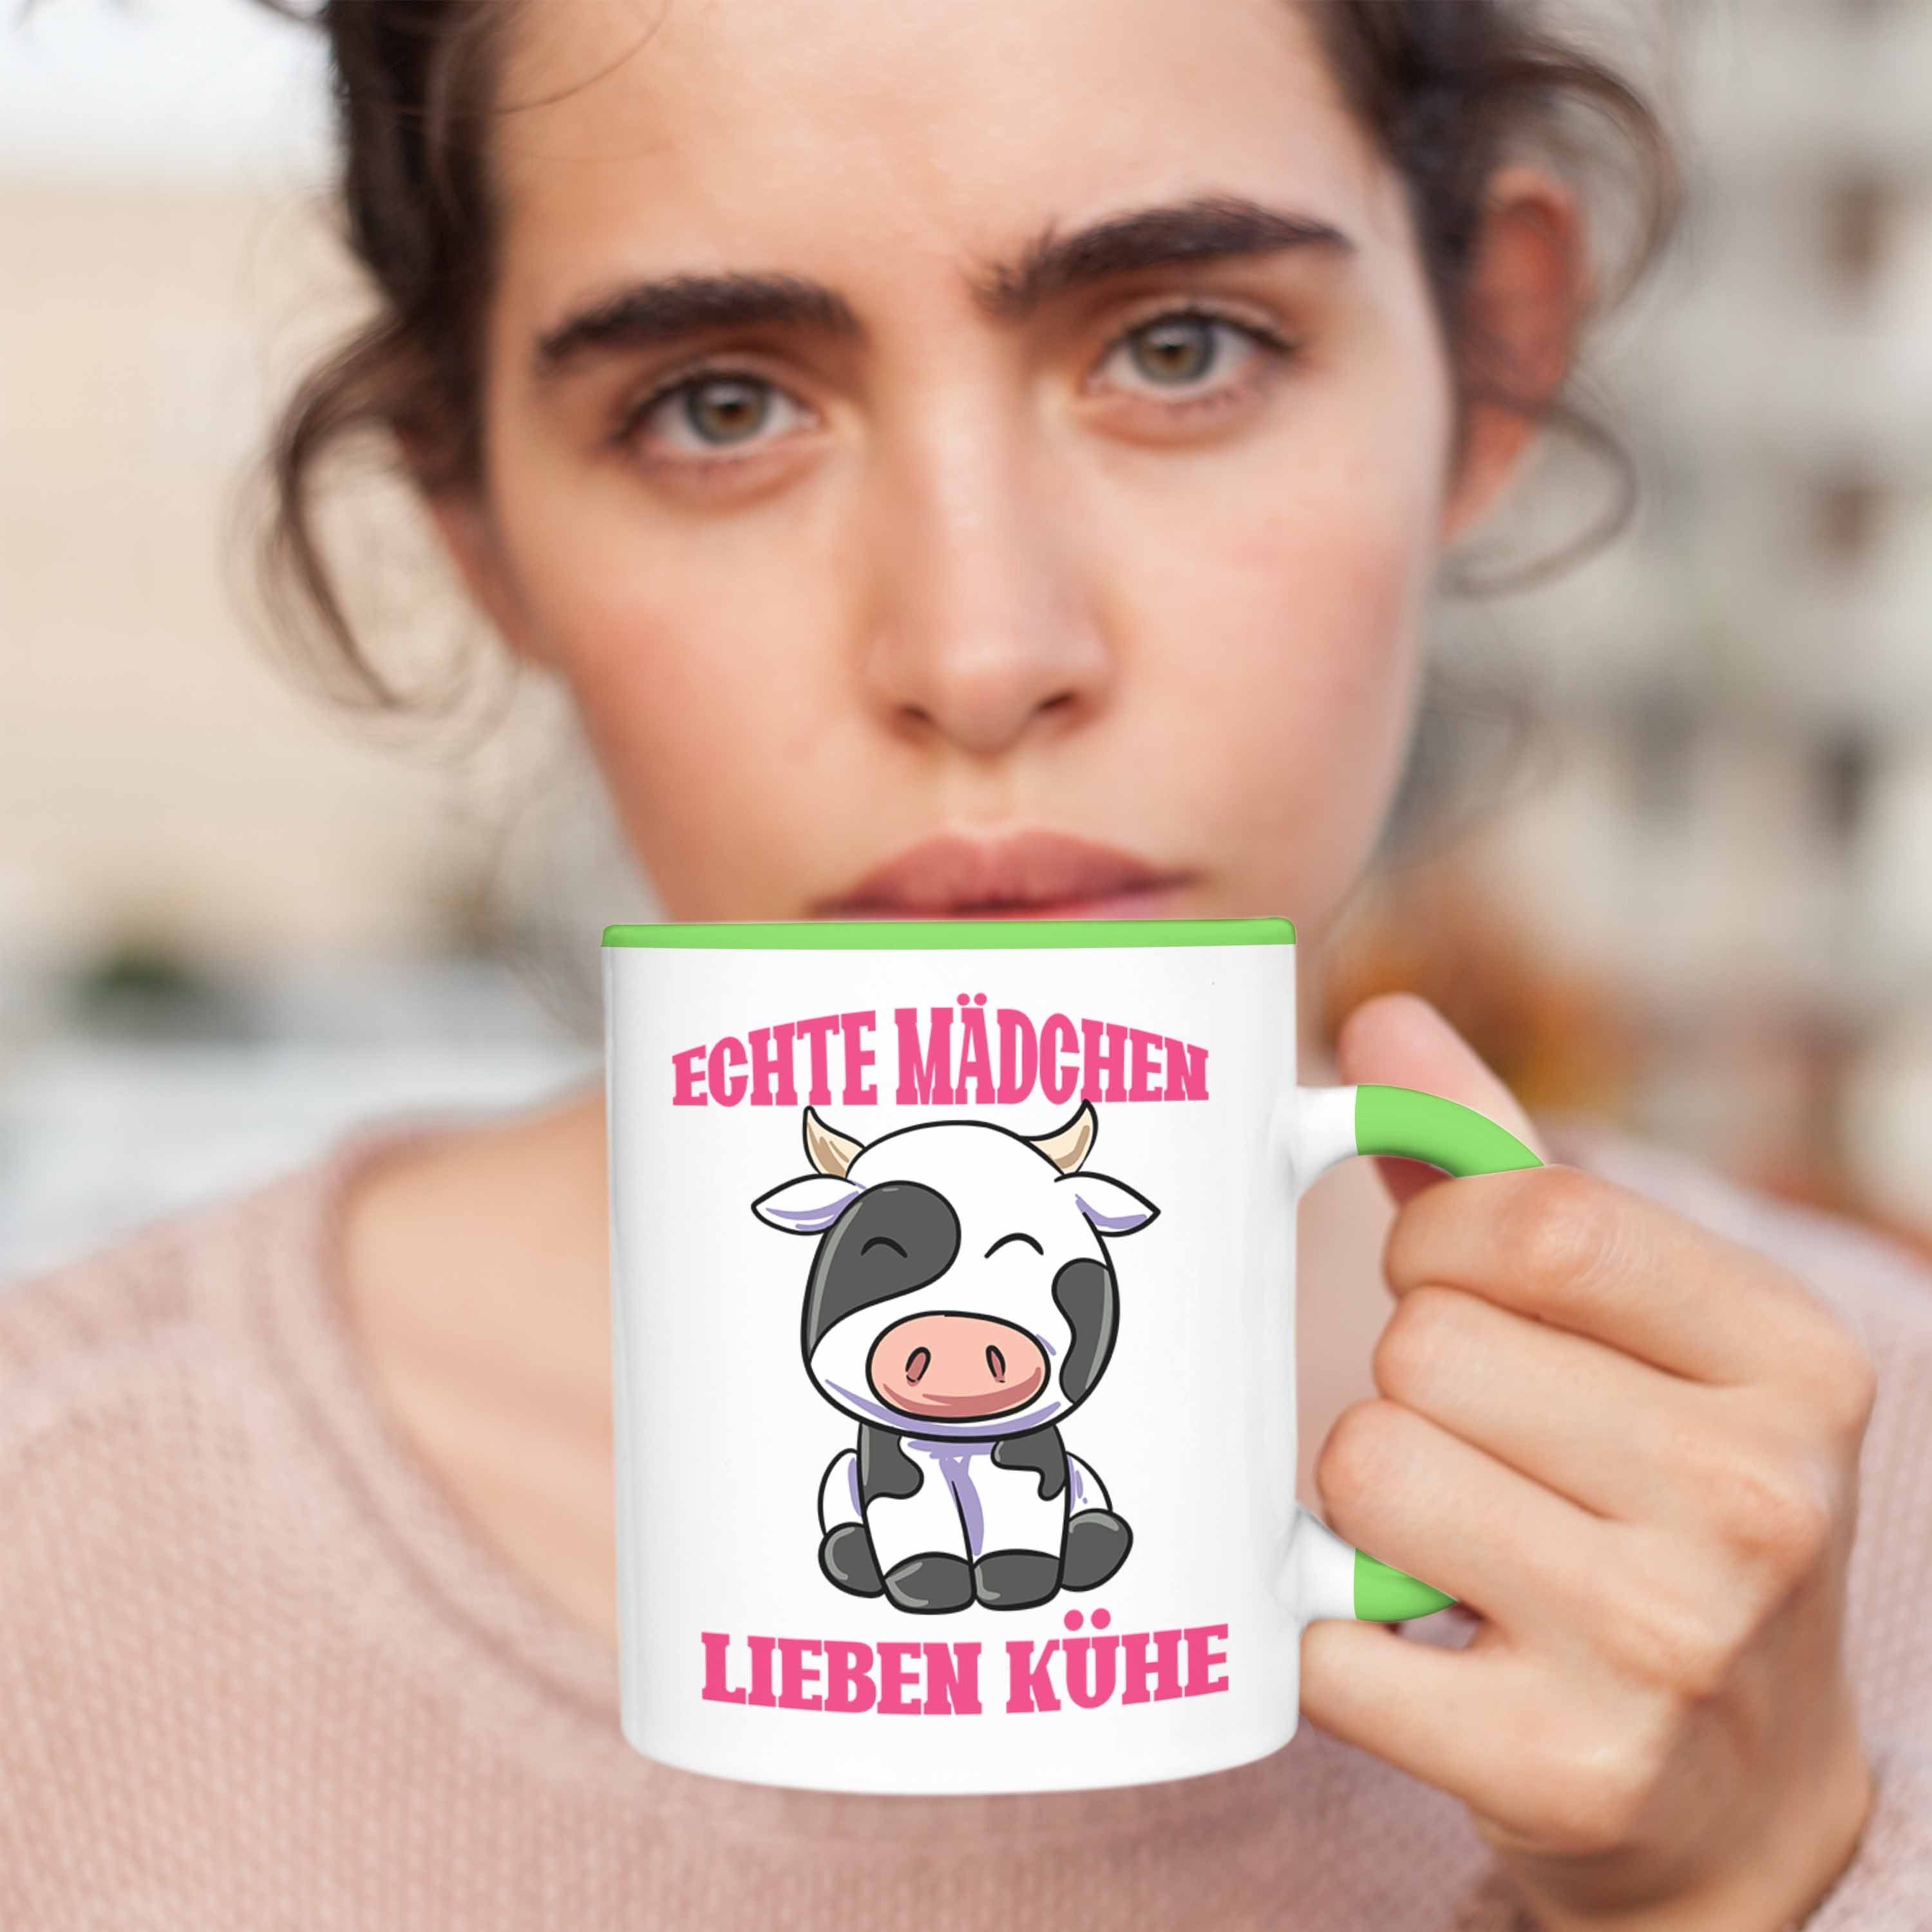 Trendation Mädchen Tasse Grün Kühe Bäuerin Tasse Geschenk Gesch Echte Lieben Landwirtin Kuh